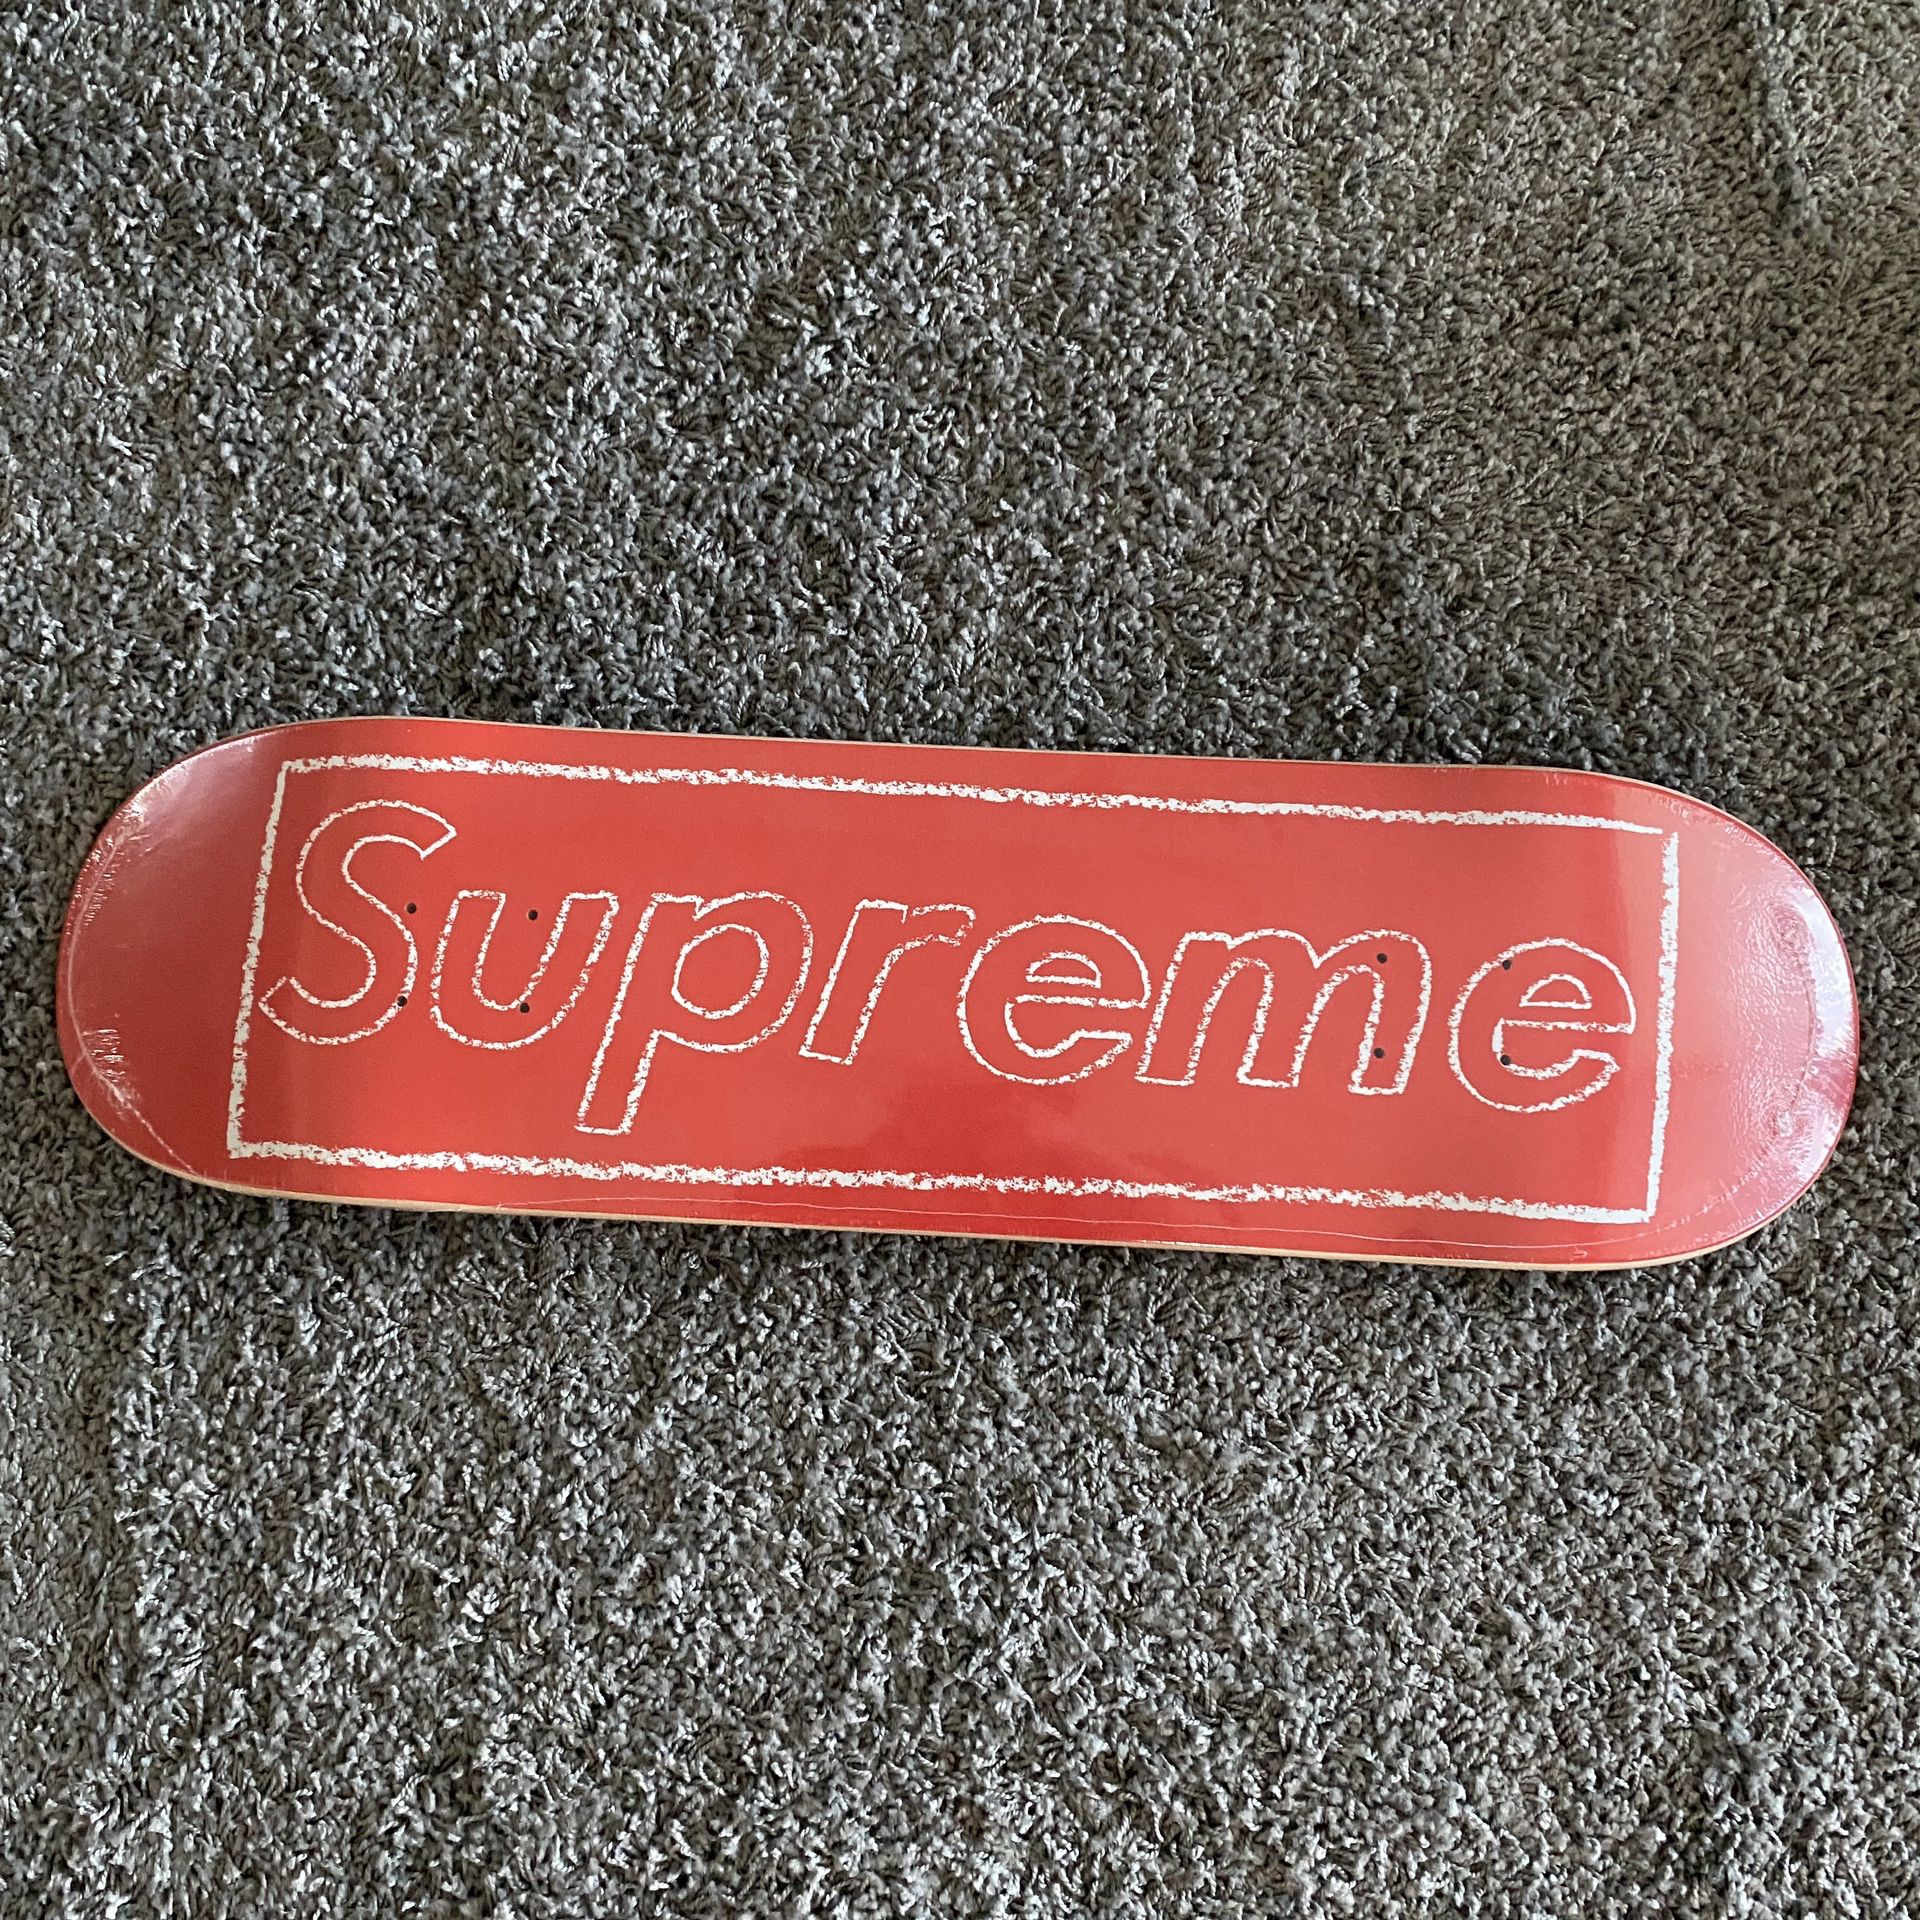 Supreme X Kaws Chalk Logo Skateboard Deck In Red